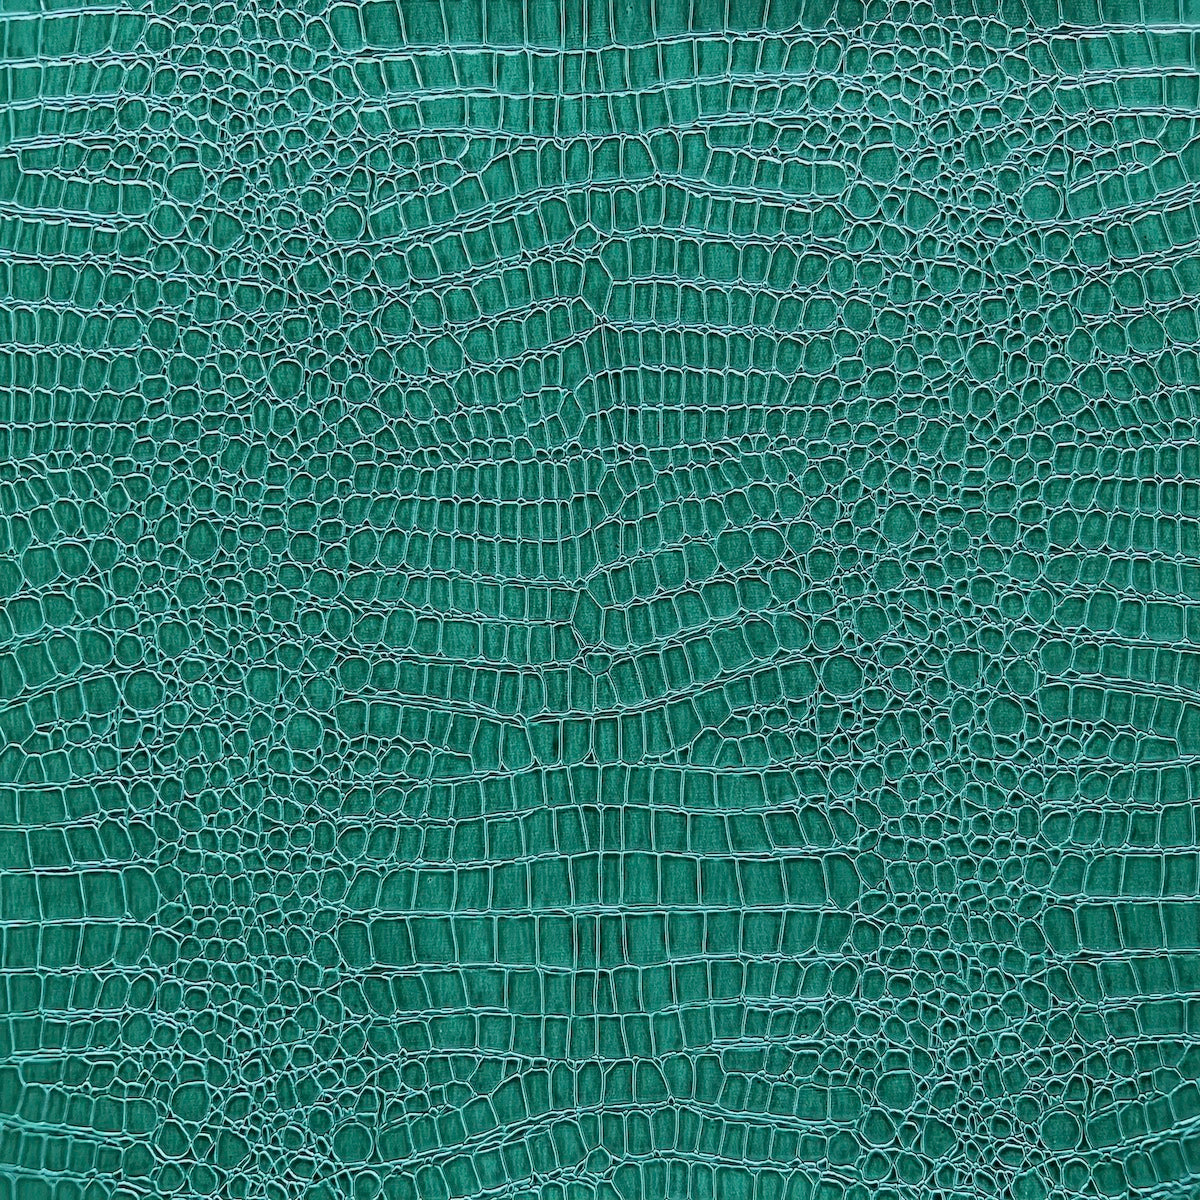 Teal Green Crocodile Vinyl Fabric